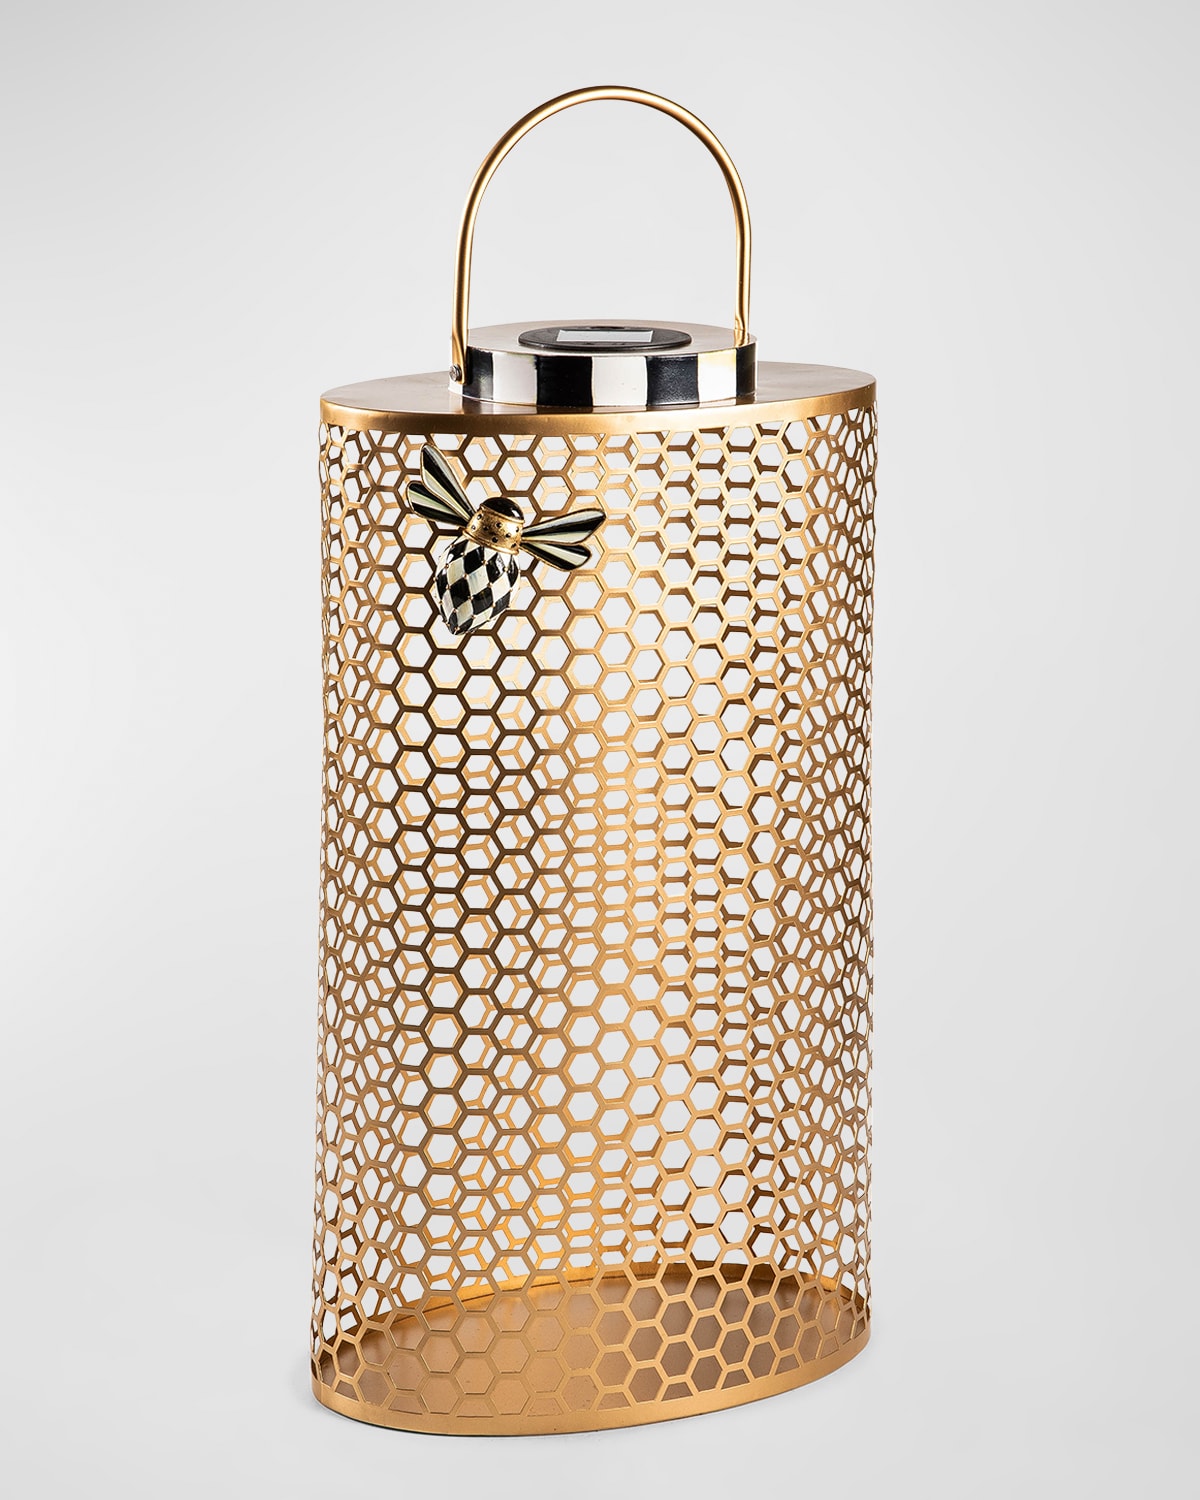 Mackenzie-childs Honeycomb Solar Lantern, Large In Gold